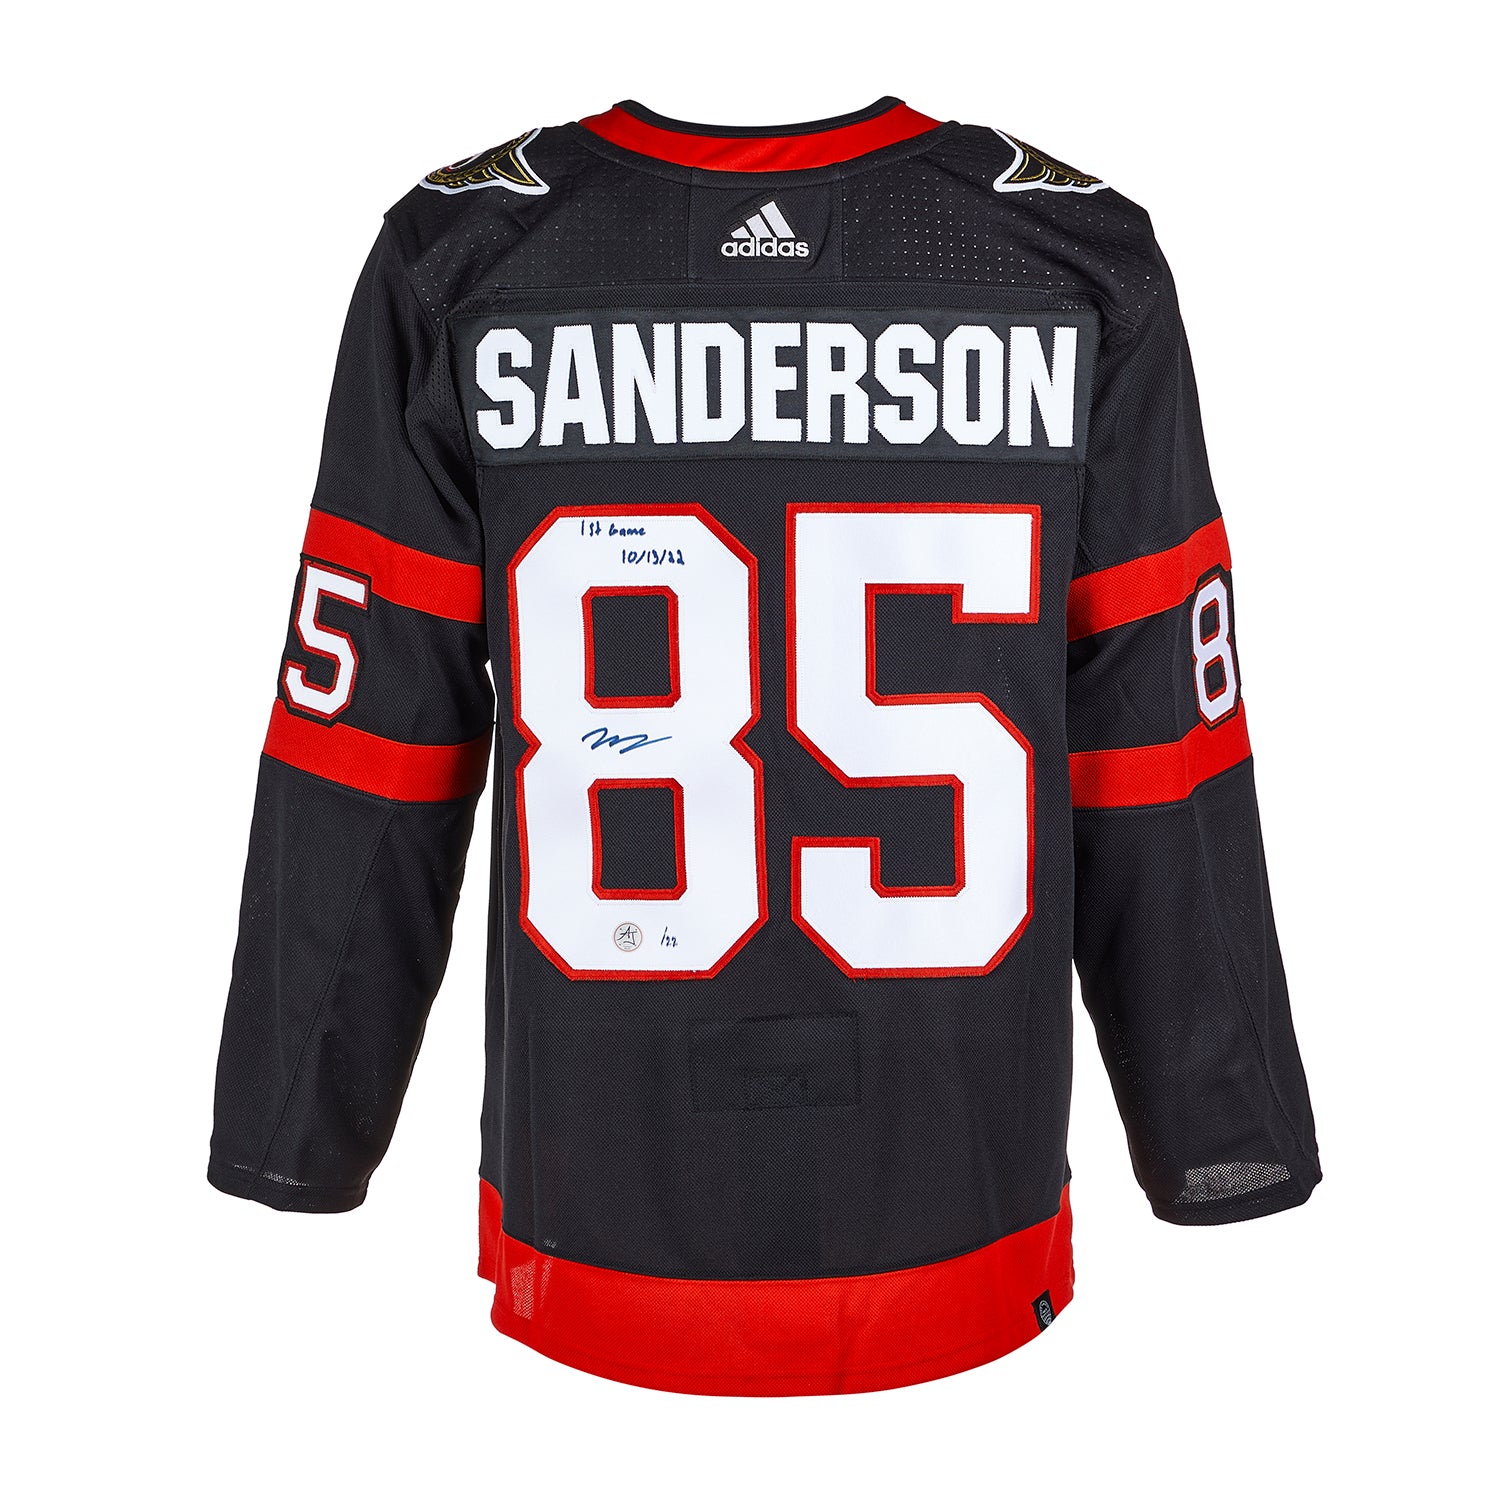 Jake Sanderson Autographed Signed Ottawa Senators Jersey - JSA COA